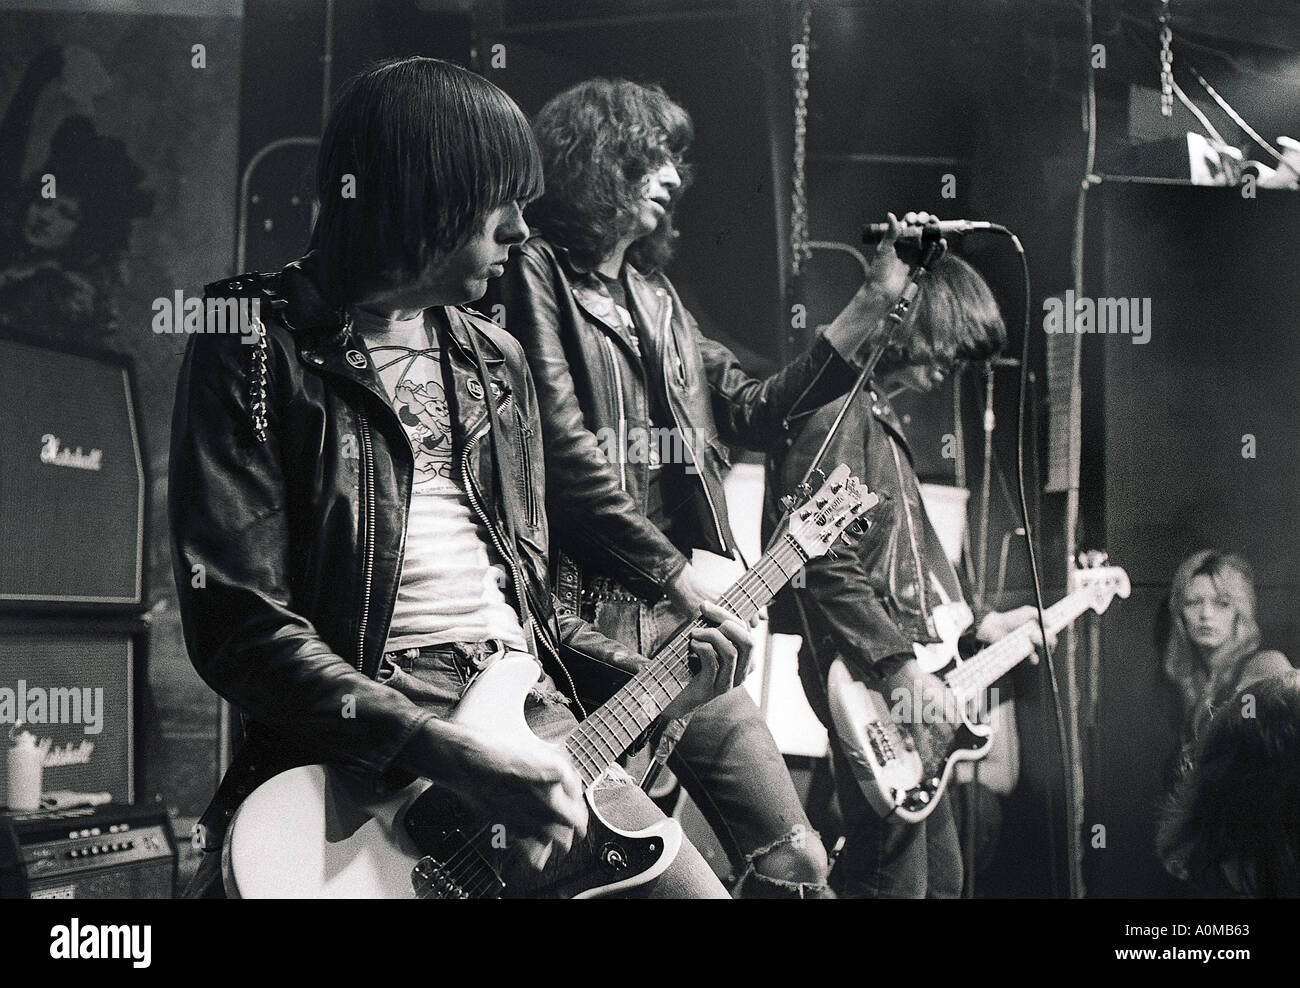 Punk Rock, New York NY, USA "CBGB's" Nightclub Interior  "The Ramones" Performing on Stage "Johnny Ramone", punk rock'n'roll Guitar, vintage 1970s Stock Photo